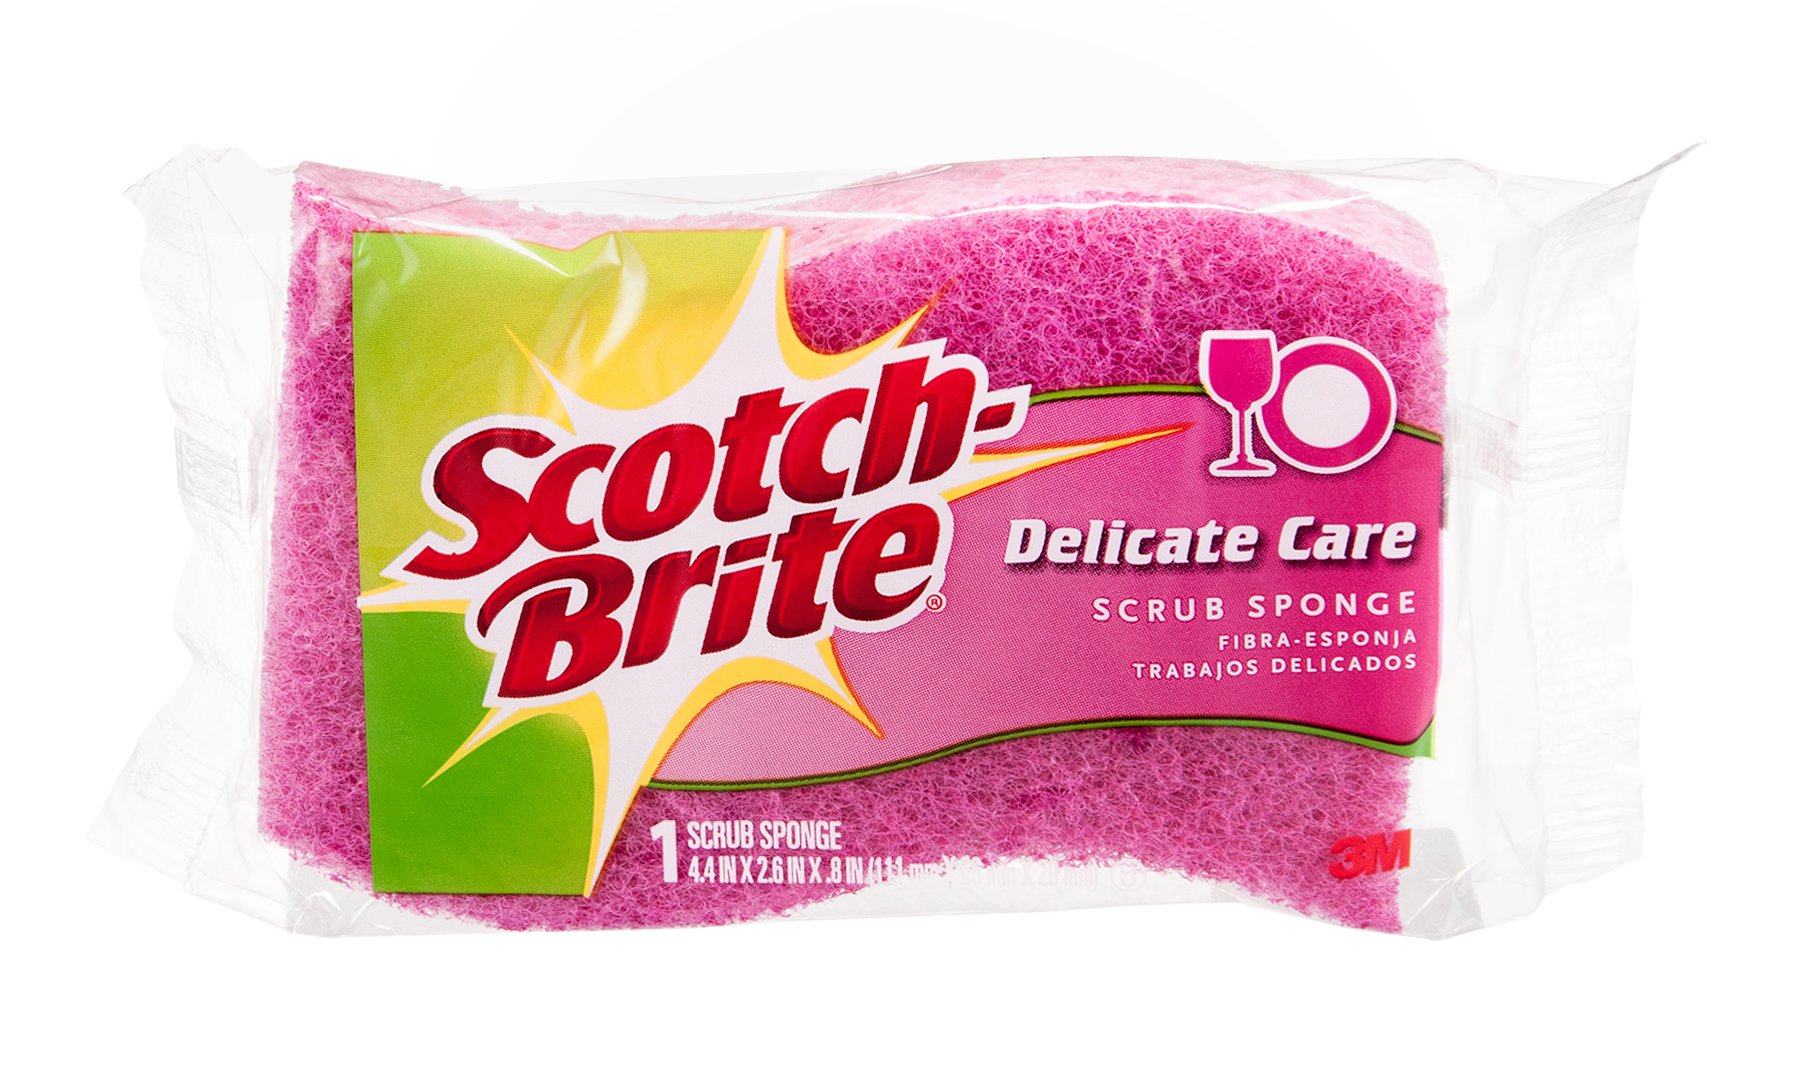 Scotch-Brite Heavy Duty Scrub Dots Sponges - Shop Sponges & Scrubbers at  H-E-B